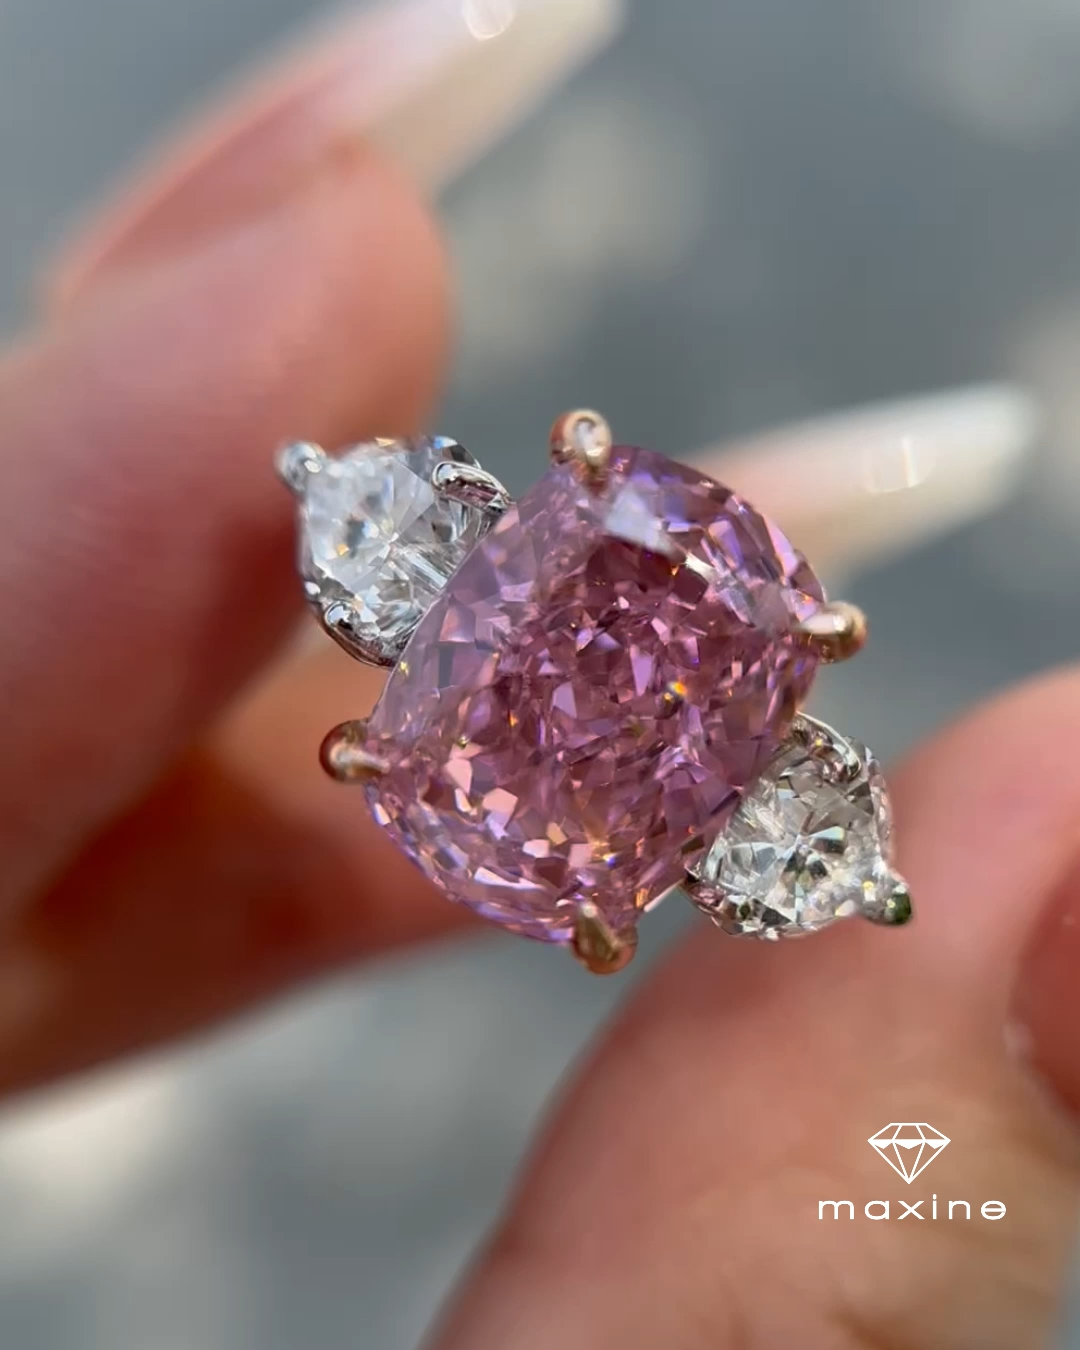 Heart Shaped Pink Diamond Ring, Three Stone Vivid Pink Diamond